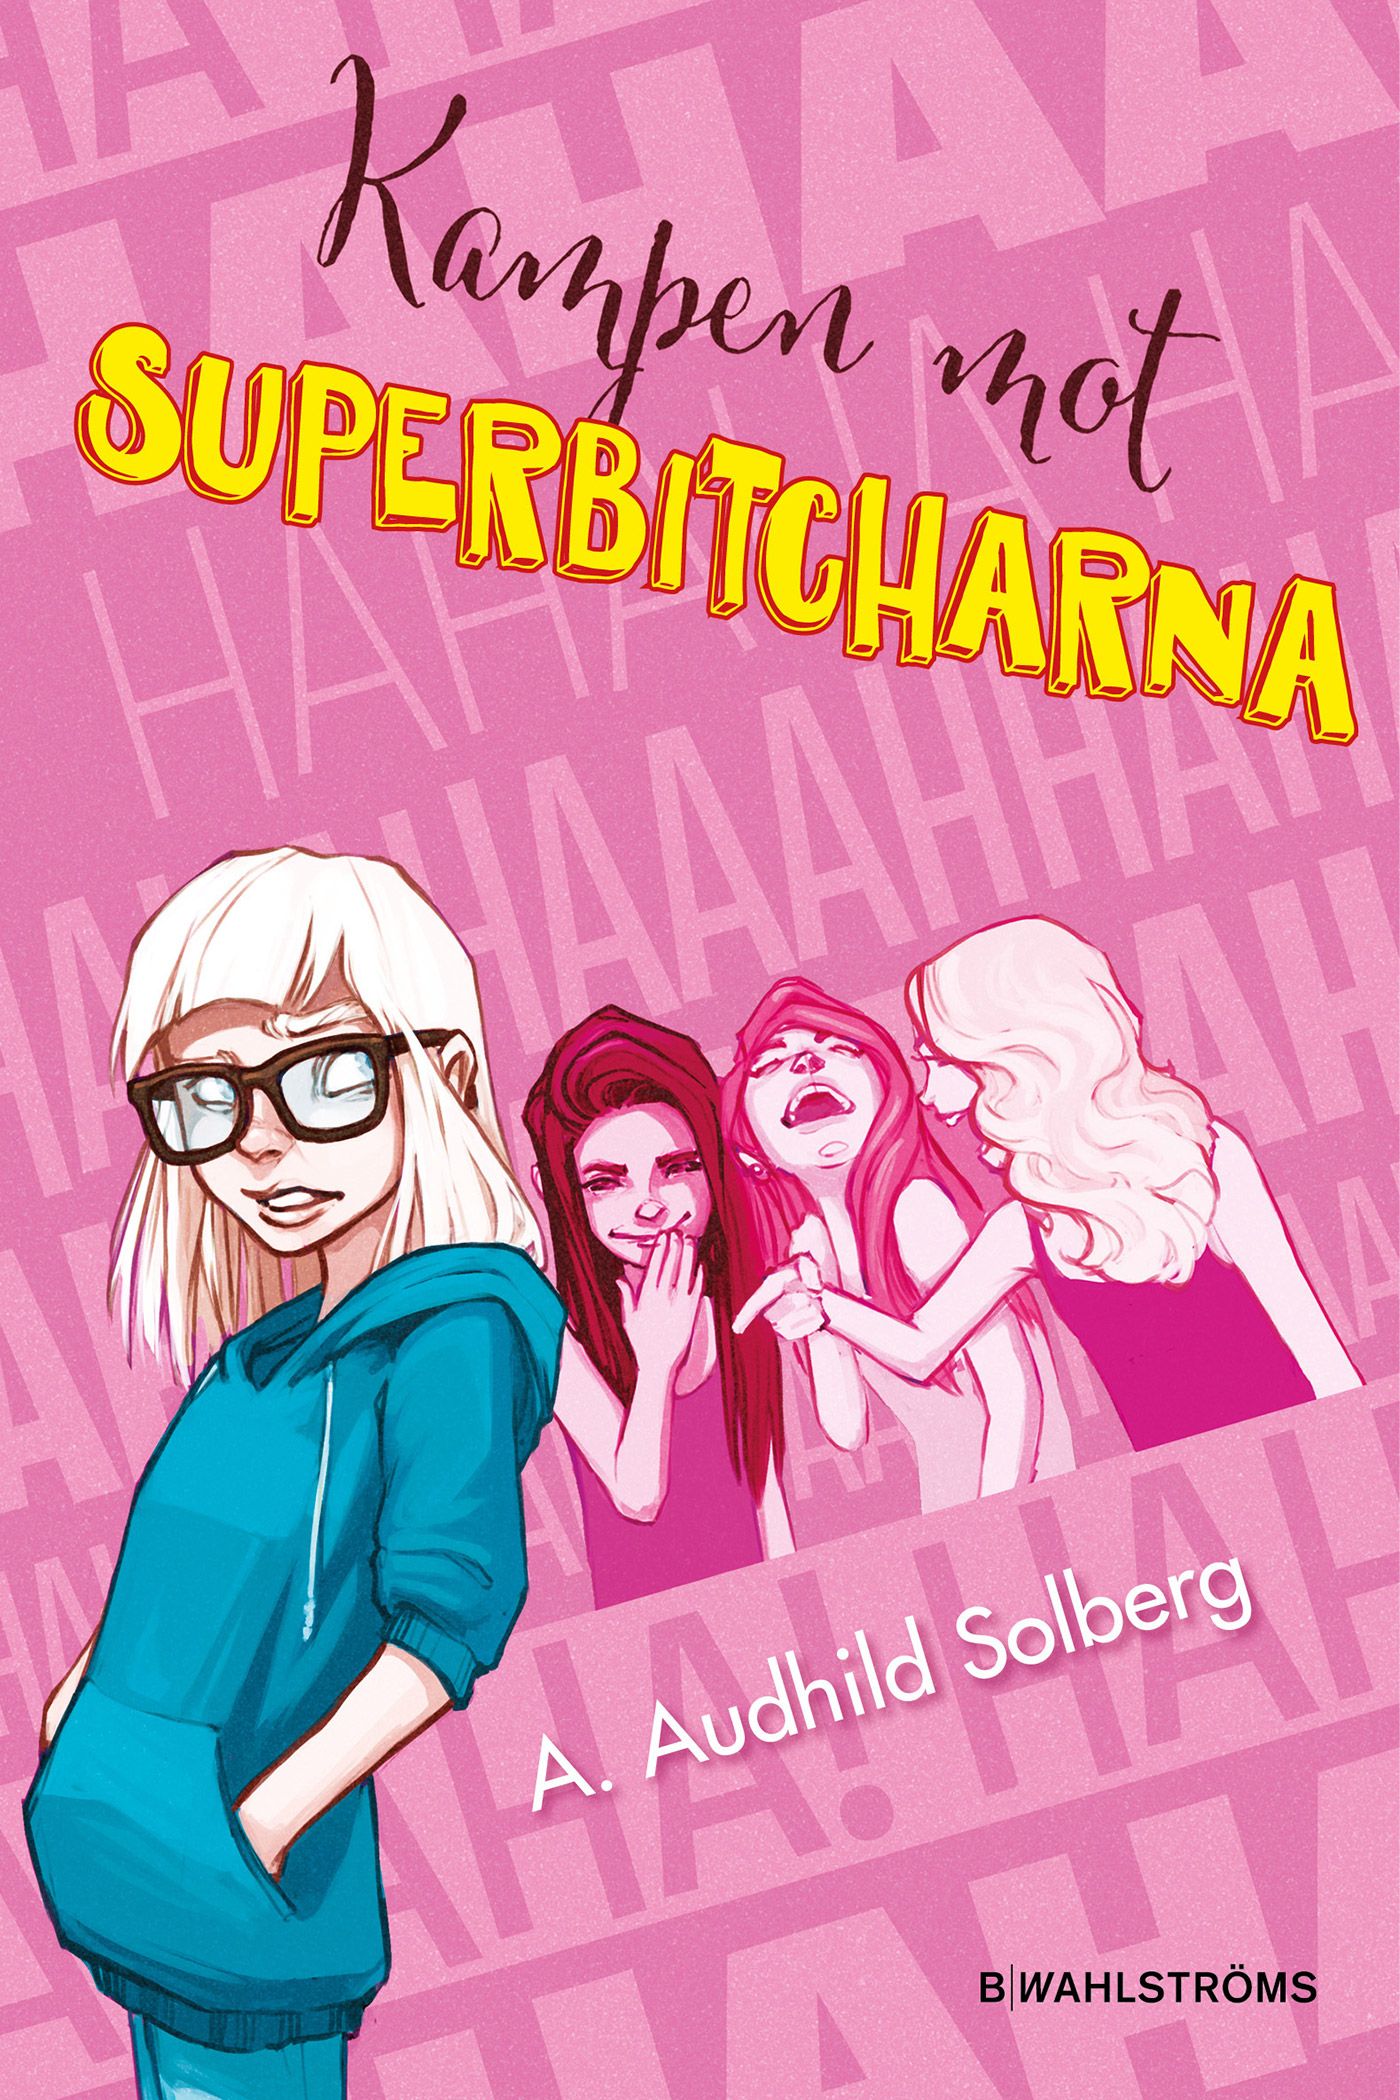 Superbitcharna 1 - Kampen mot superbitcharna, eBook by A. Audhild Solberg